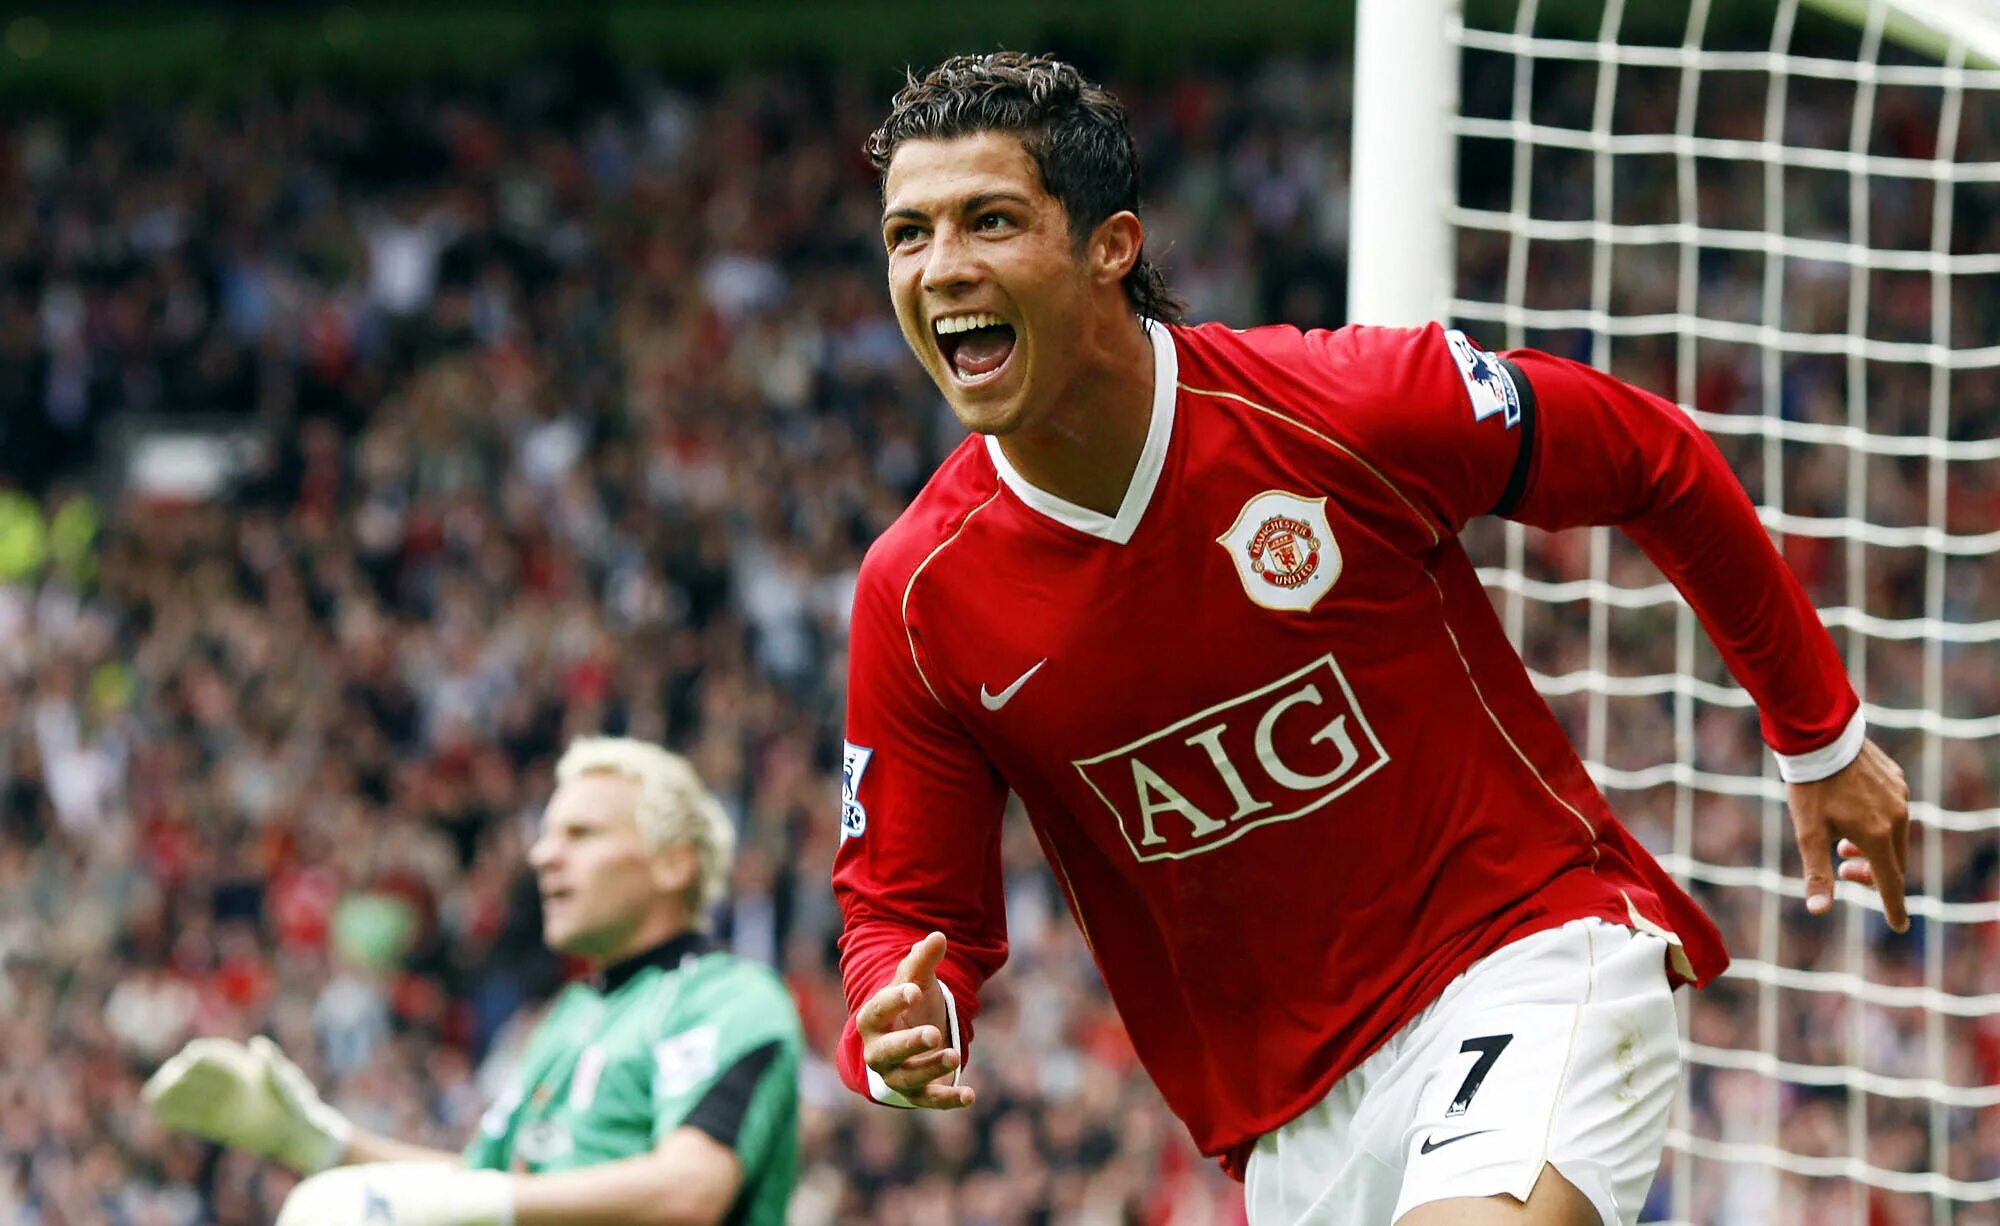 Криштиану Роналду Манчестер Юнайтед. Роналдо Манчестер 2006. Cristiano Ronaldo Manchester United 2006.